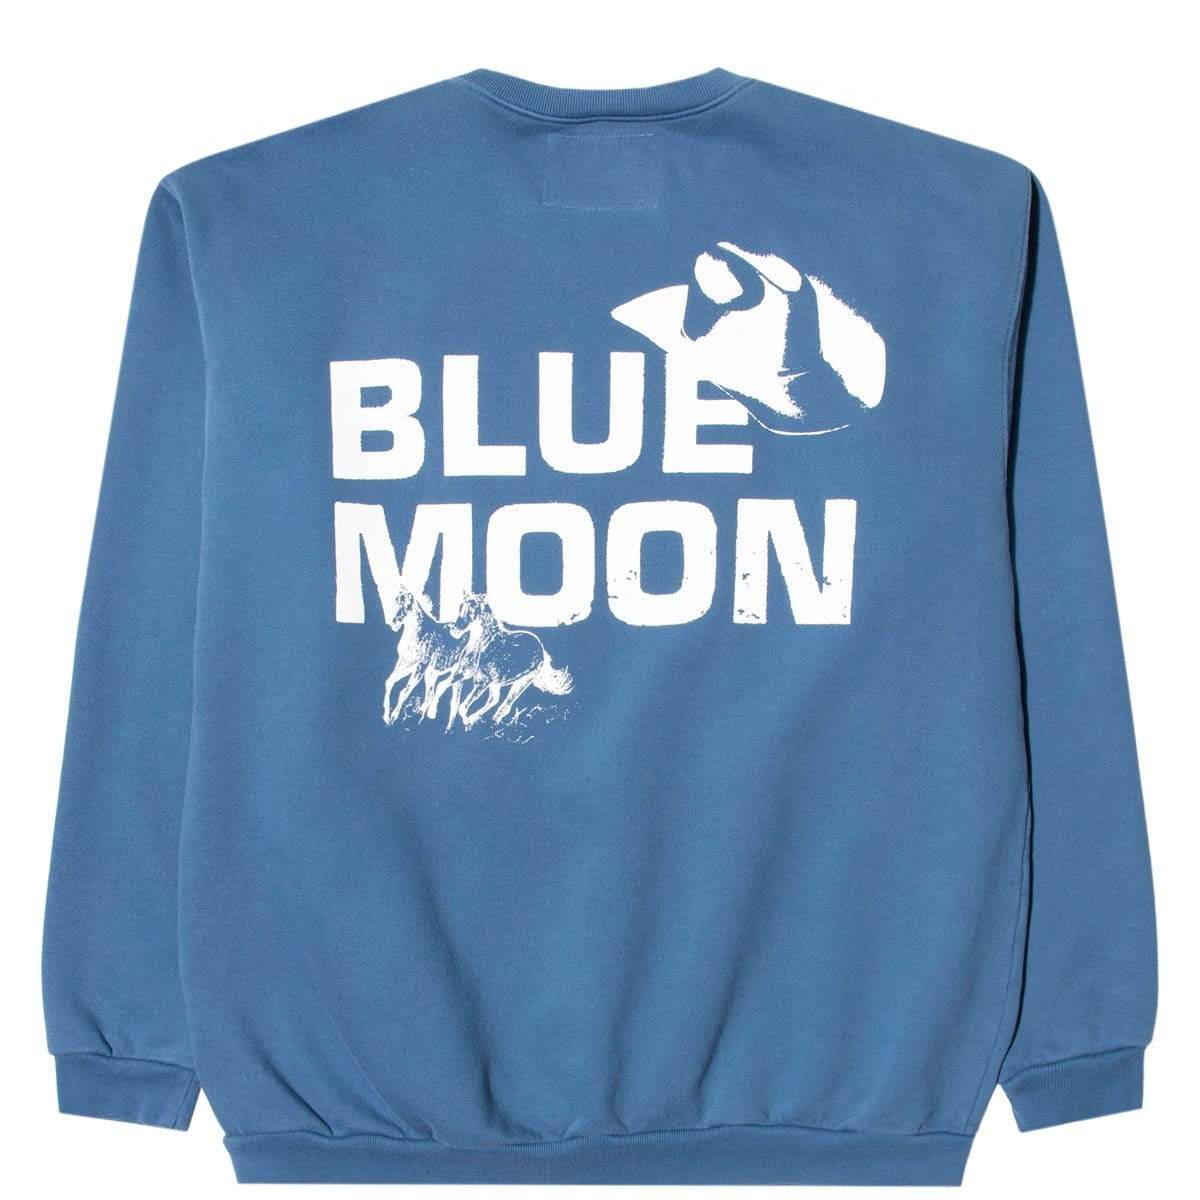 One Of These Days Hoodies & Sweatshirts BLUE MOON CREW